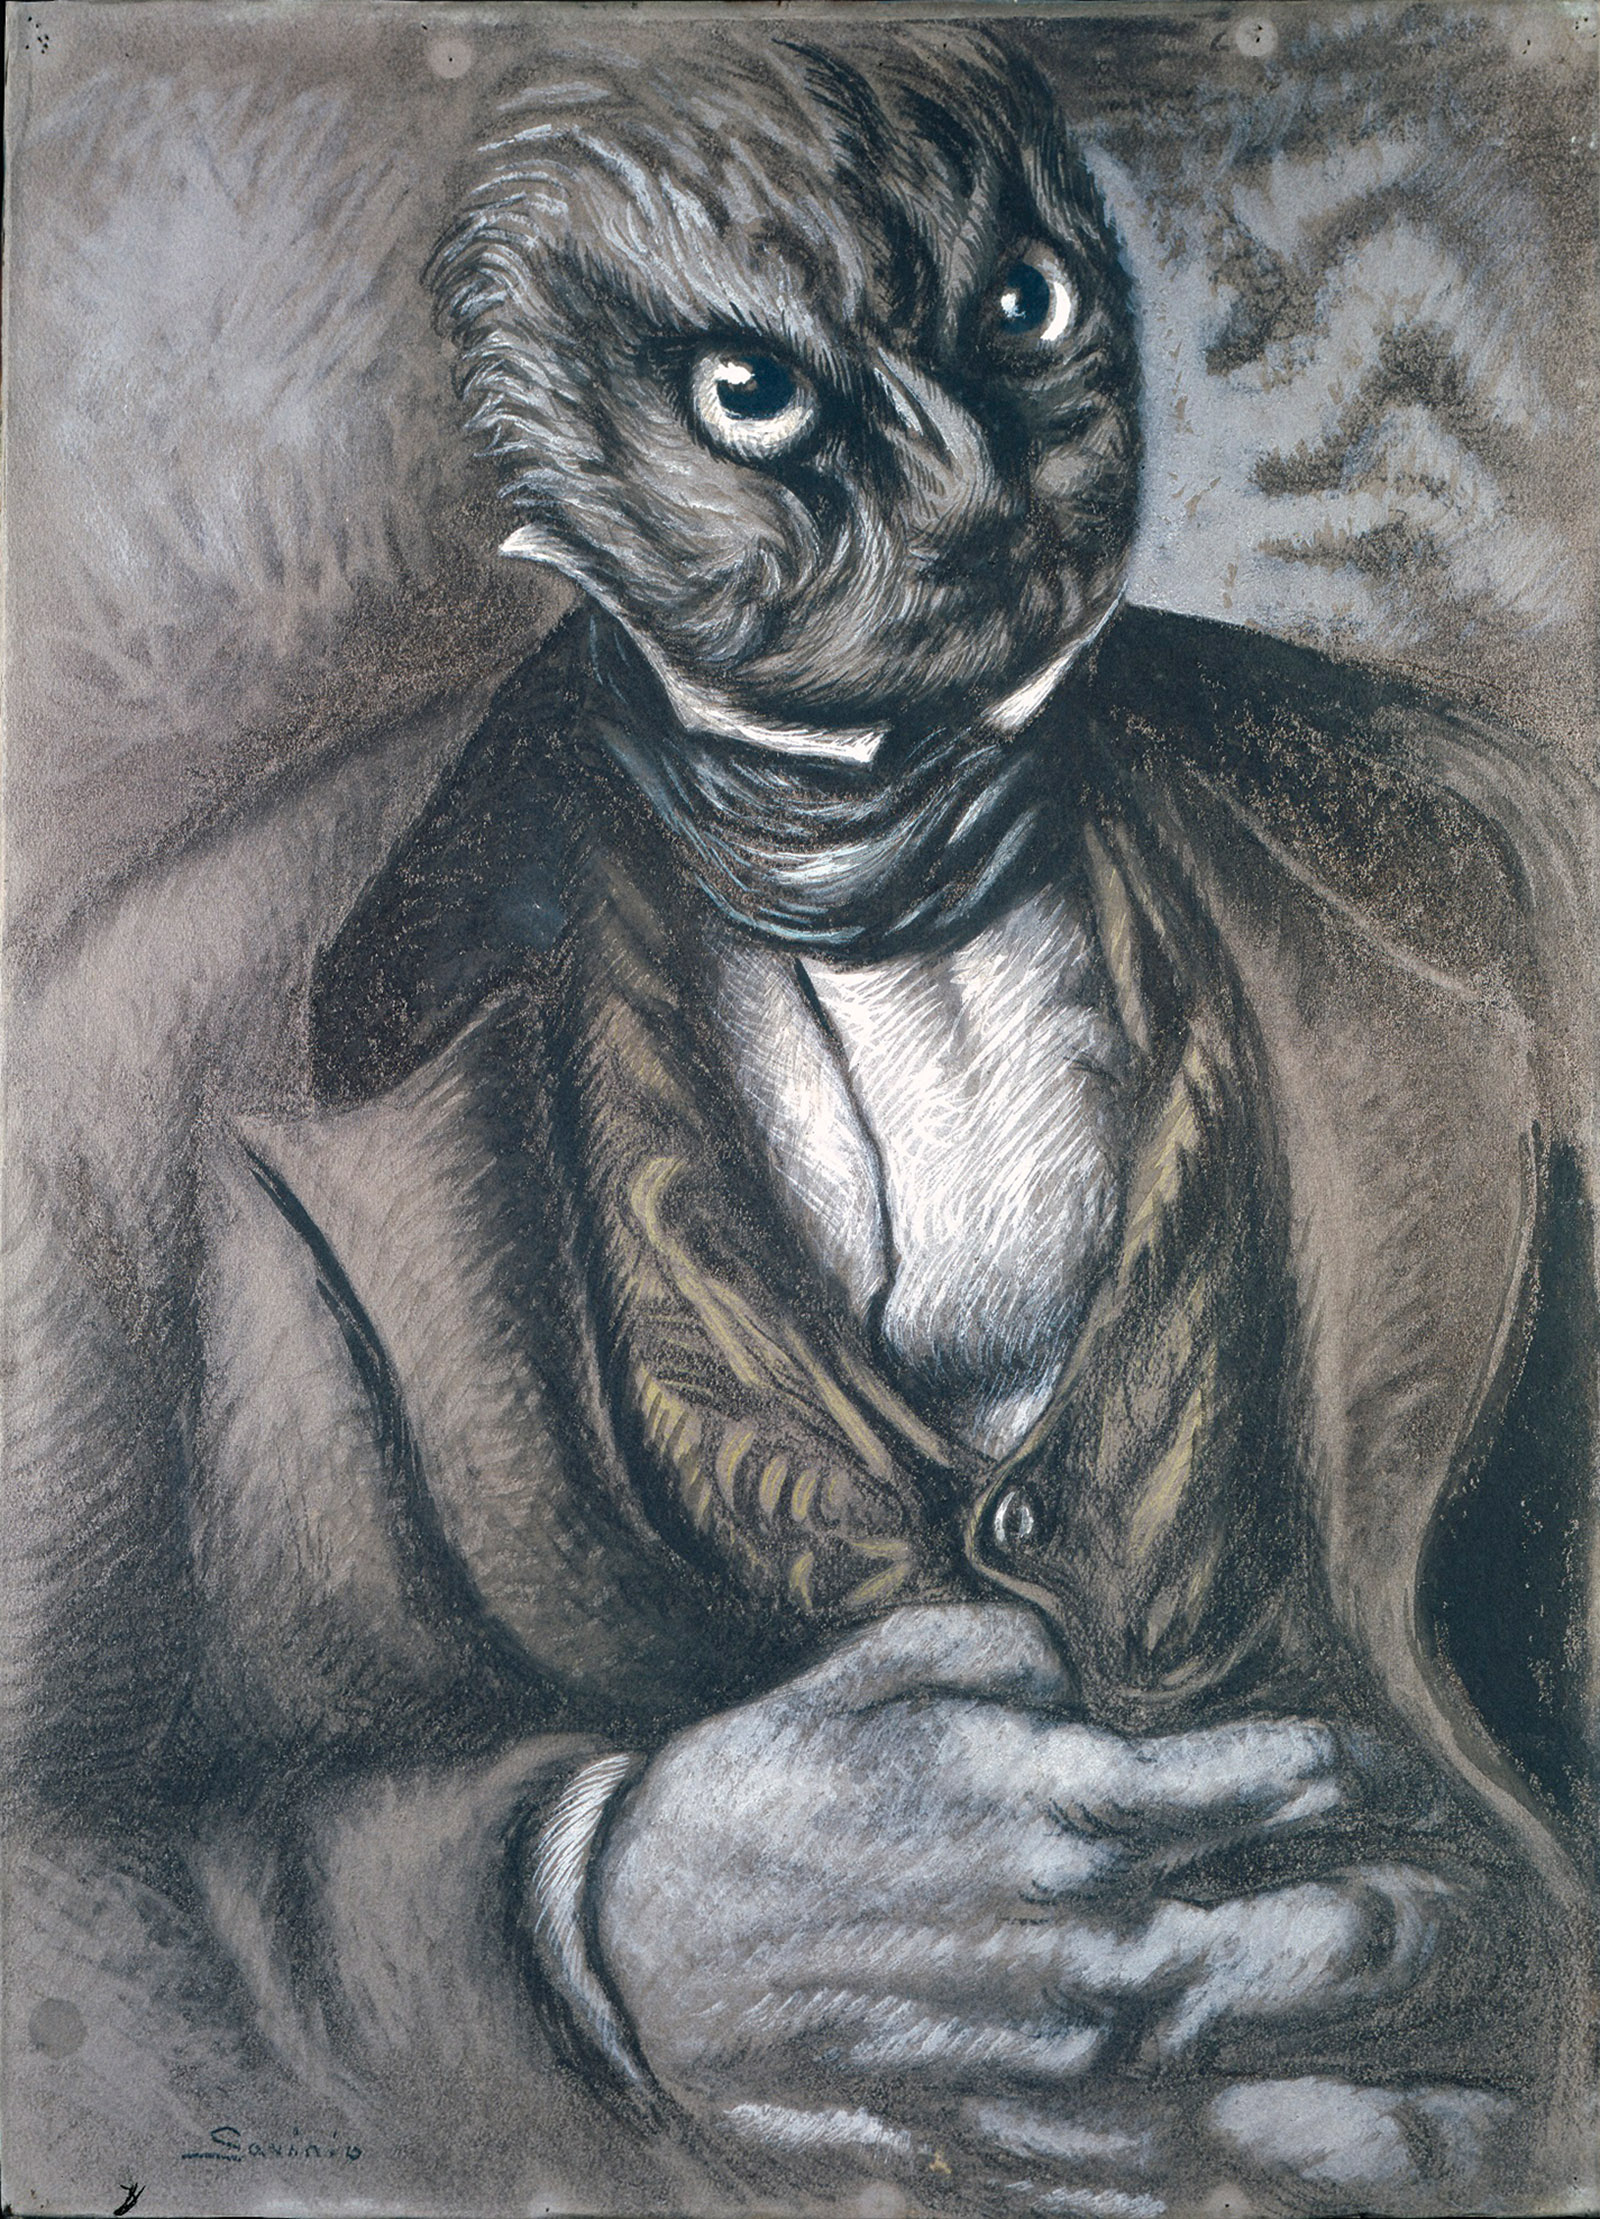 Alberto Savinio: Self-Portrait as an Owl, 1936